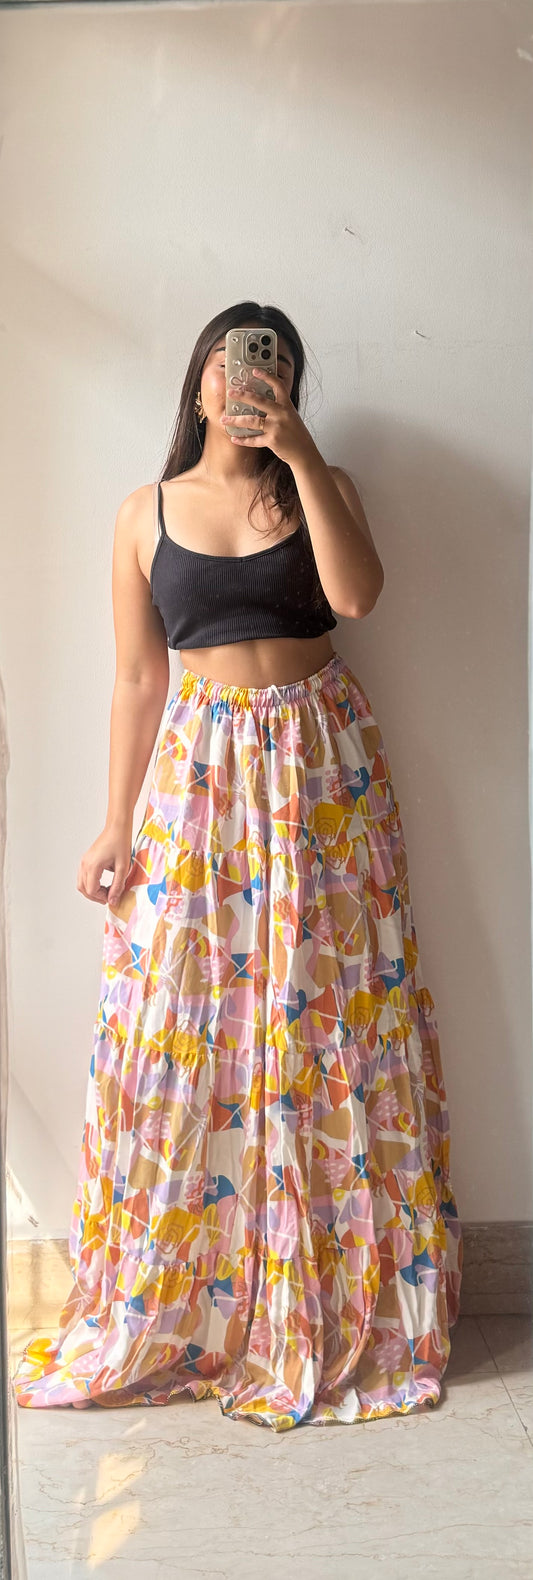 Printed pattern skirt